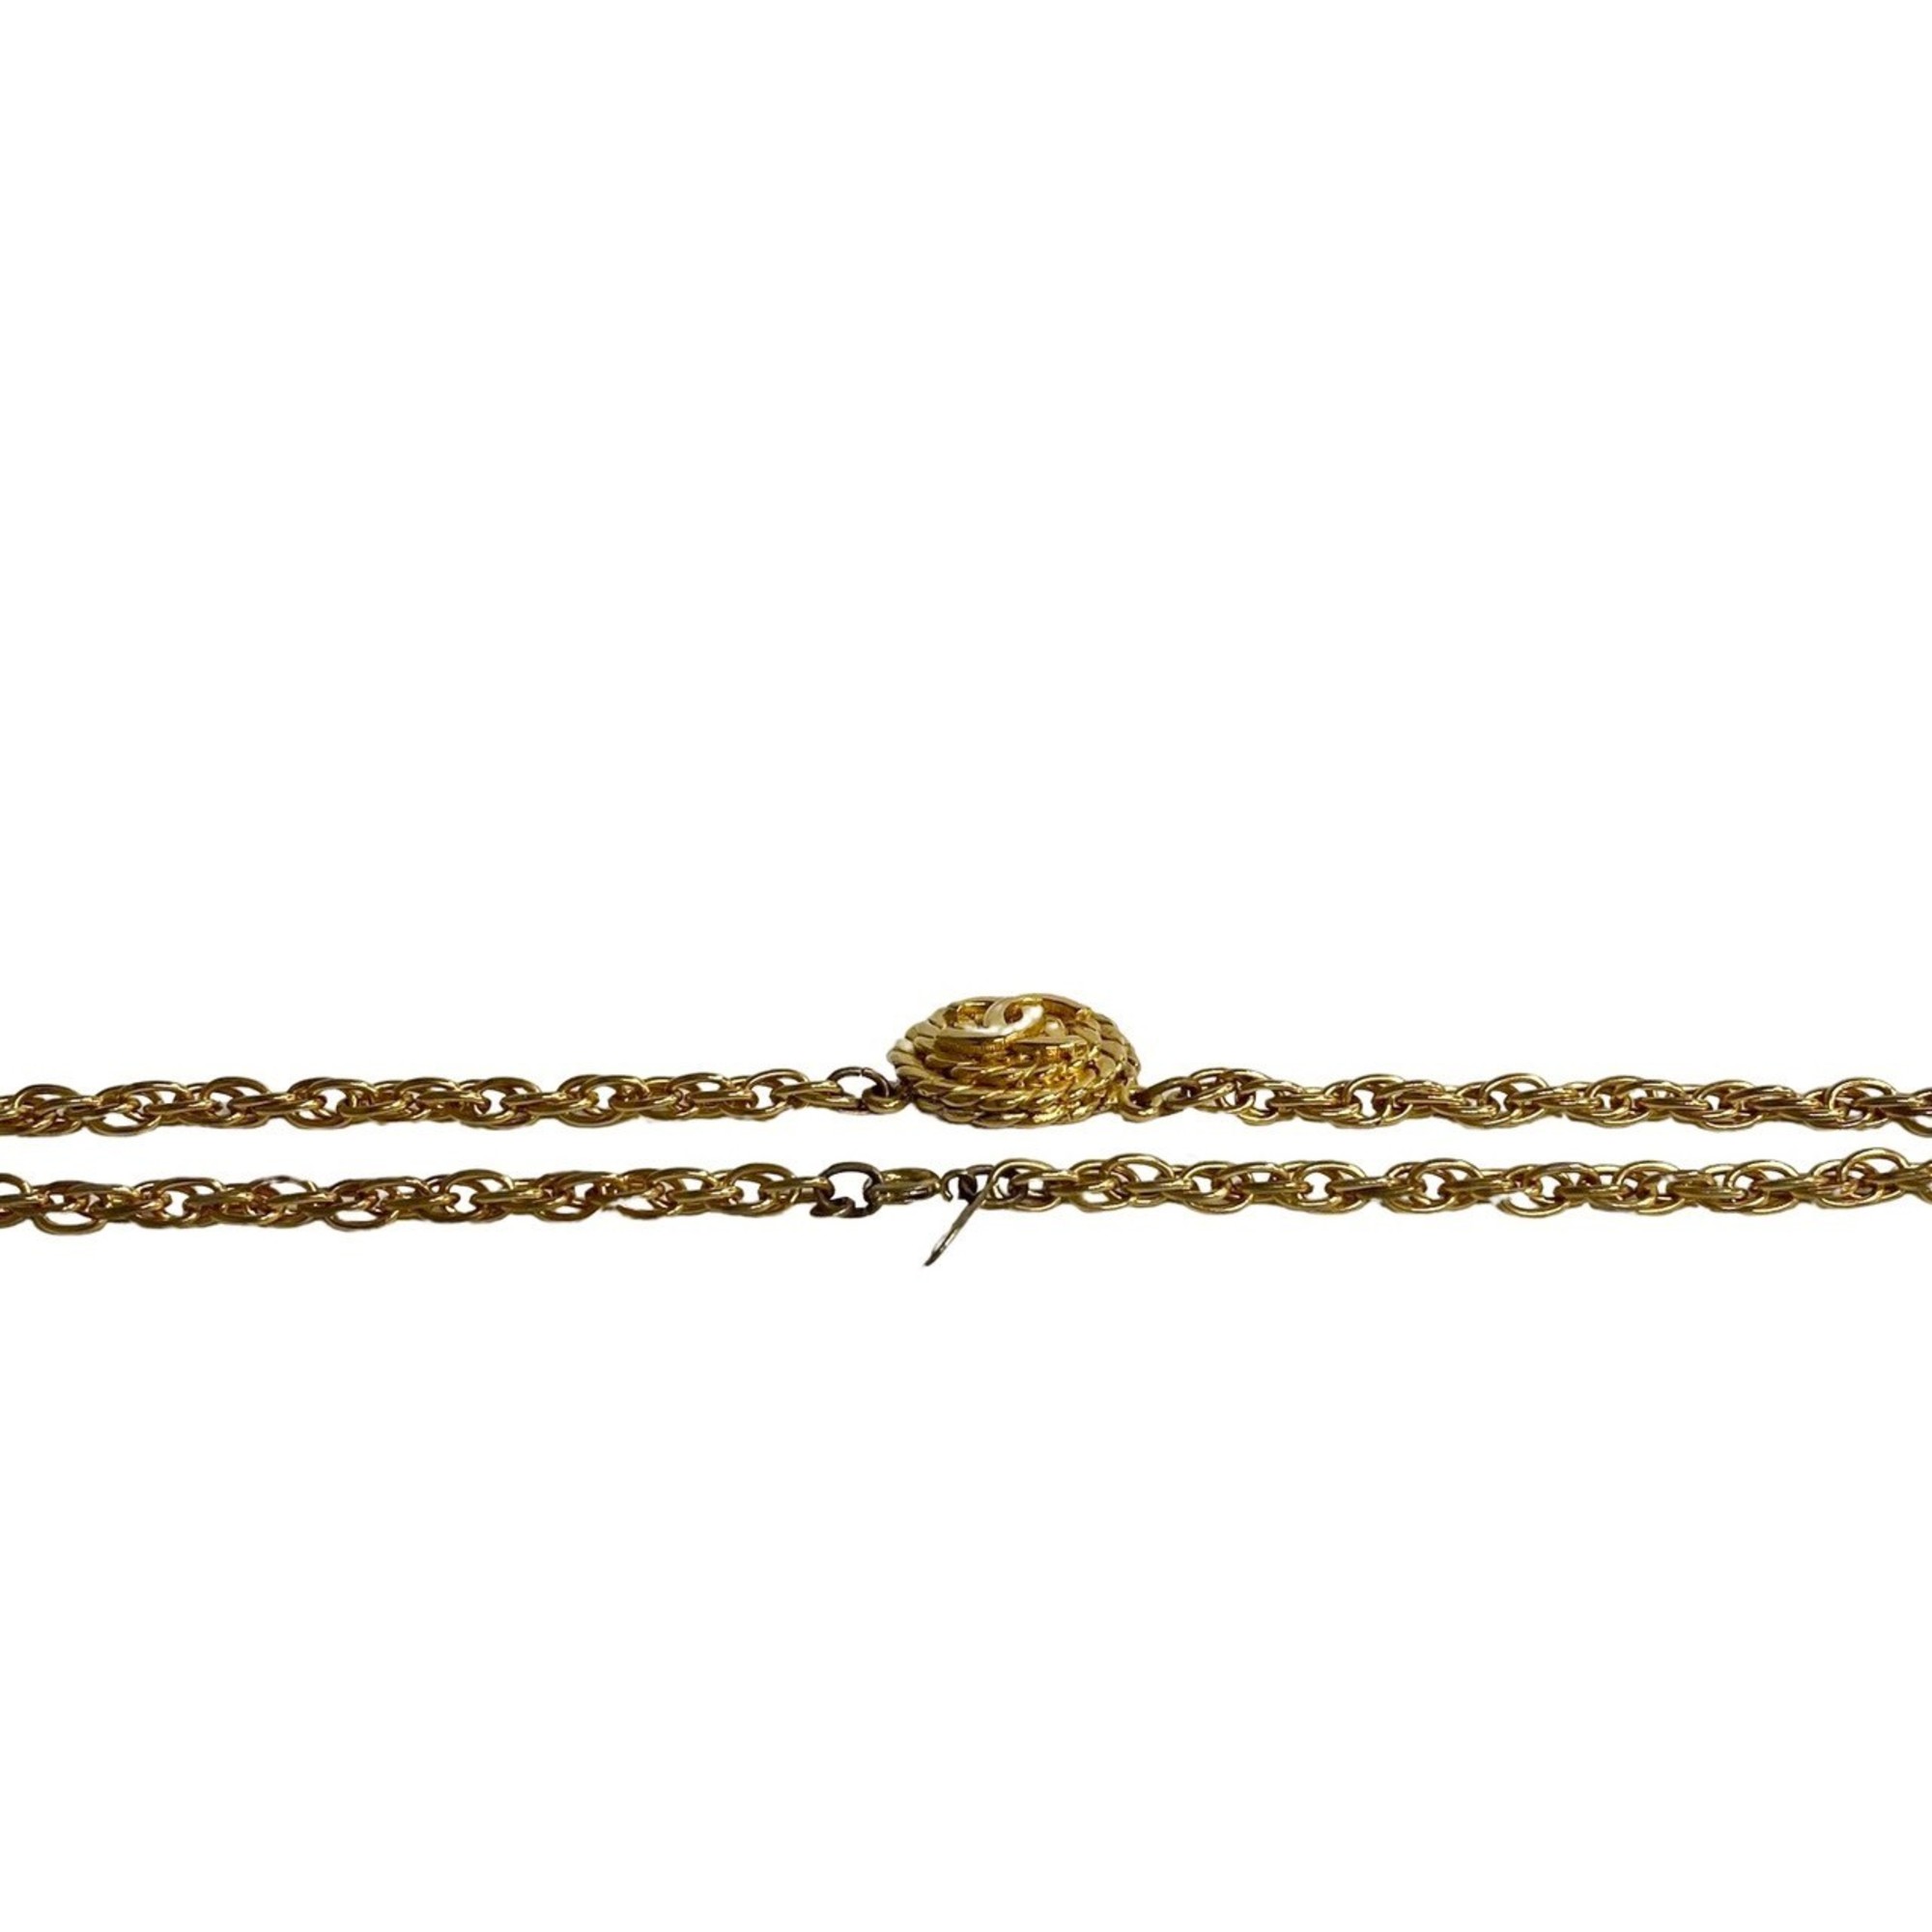 CHANEL Cocomark Motif Chain Necklace Pendant Gold 45387